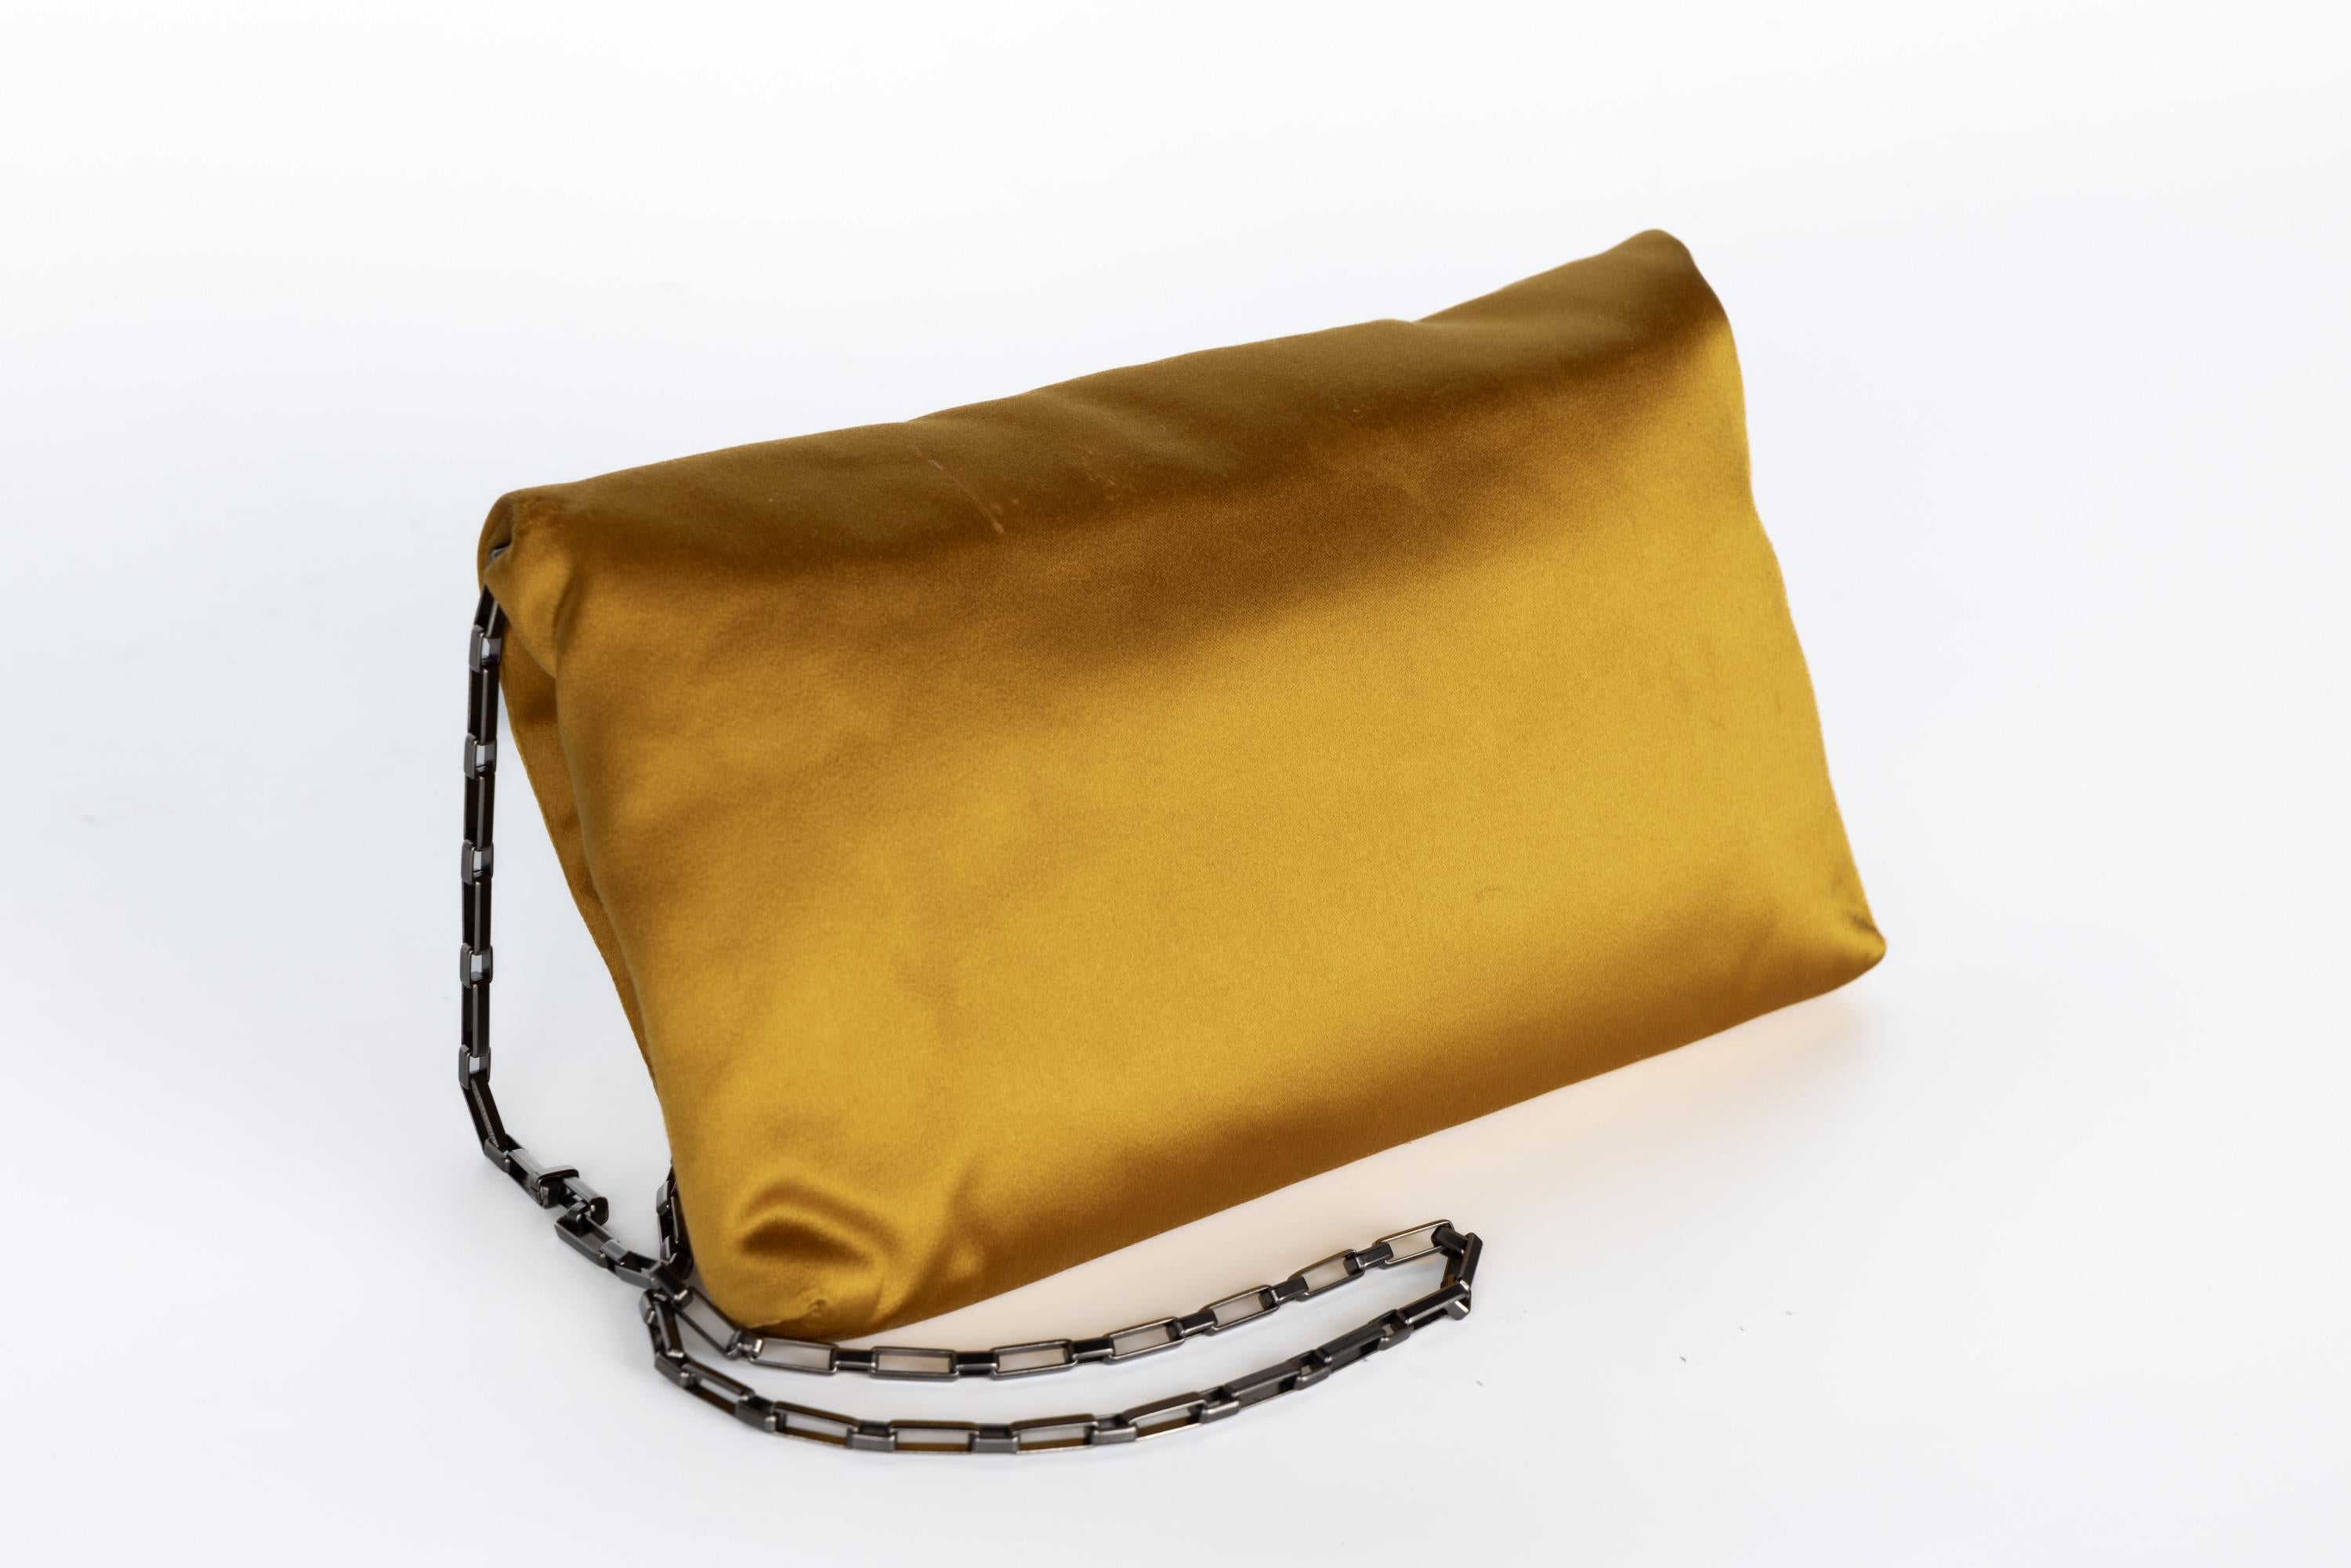 Lanvin Alber Elbaz Fall 2012 Satin Jewel Embellished Convertible Bag Clutch For Sale 4